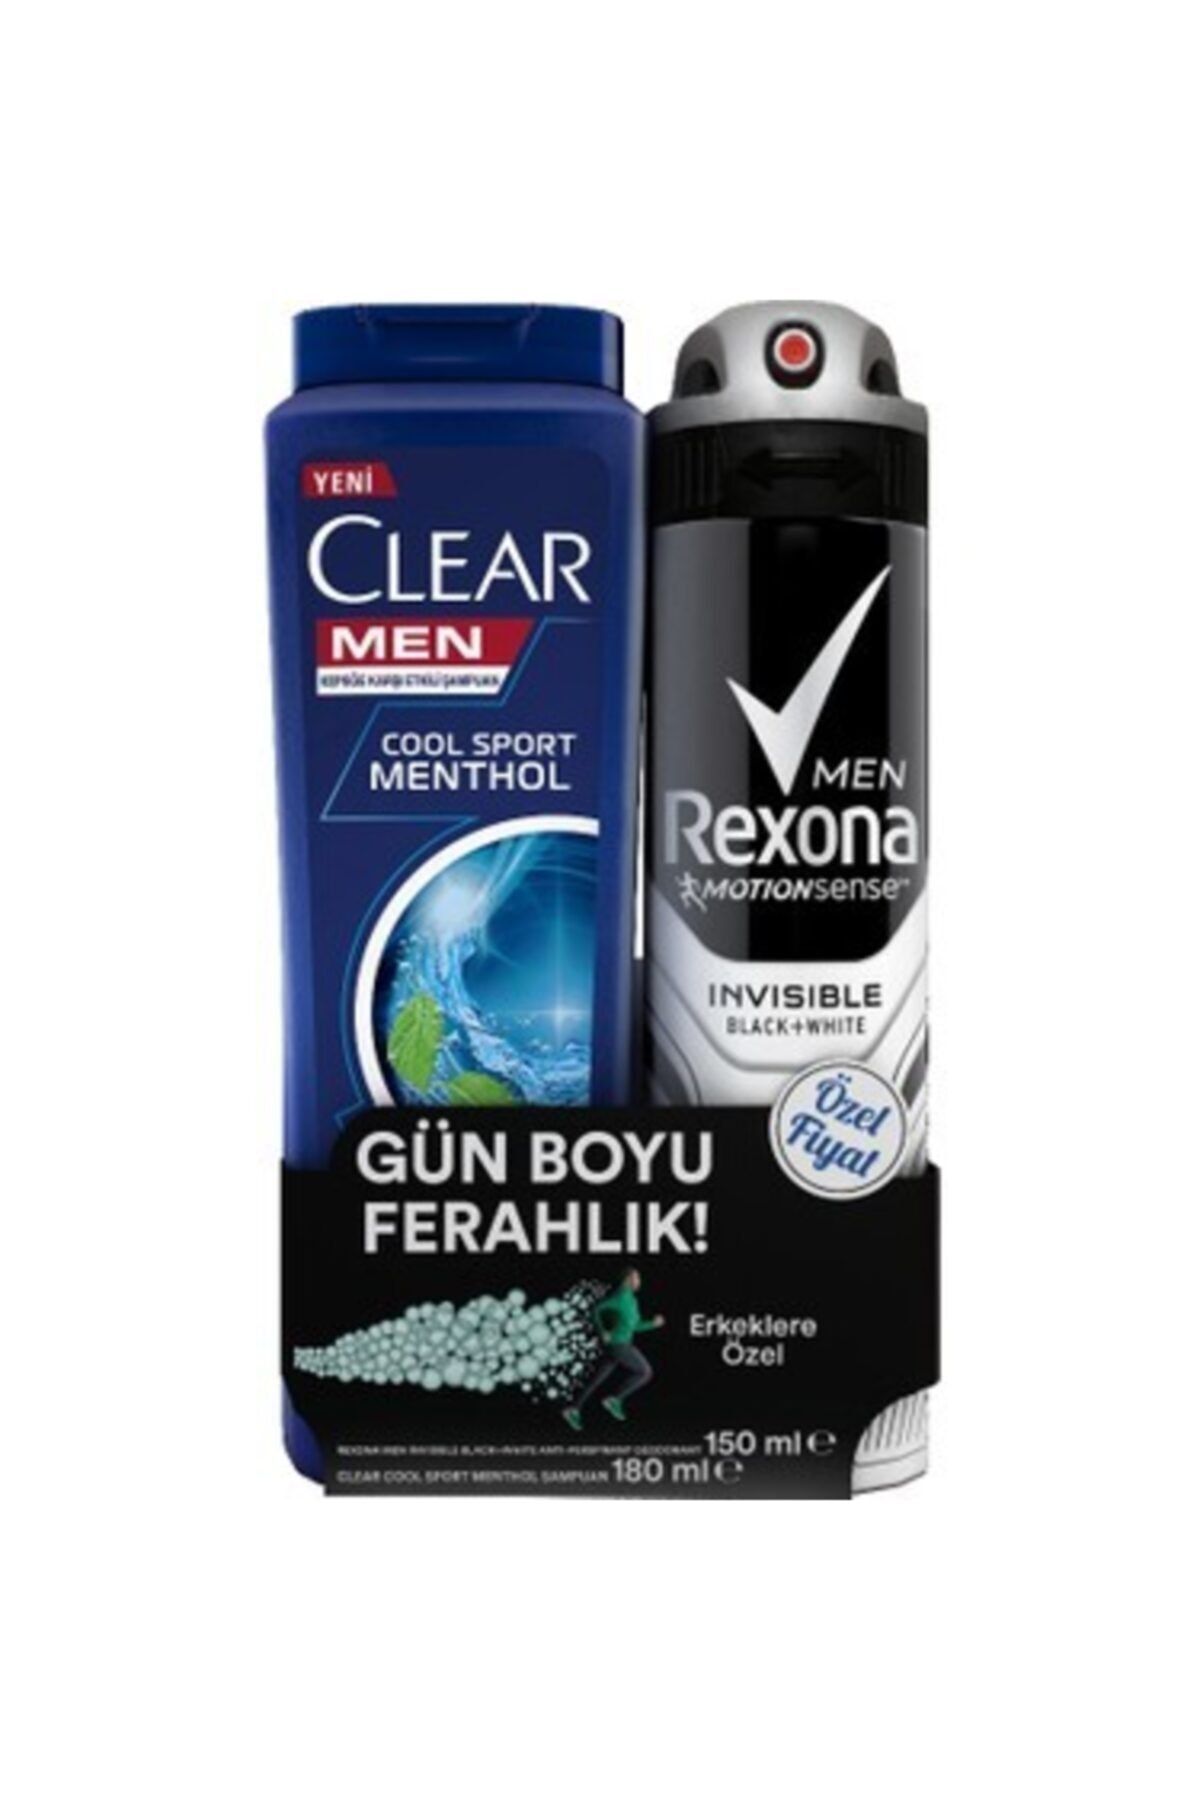 Rexona Men Invisible Black-white Deodorant 150 ml Clear Men Coolsportmenthol Şampuan 180 ml